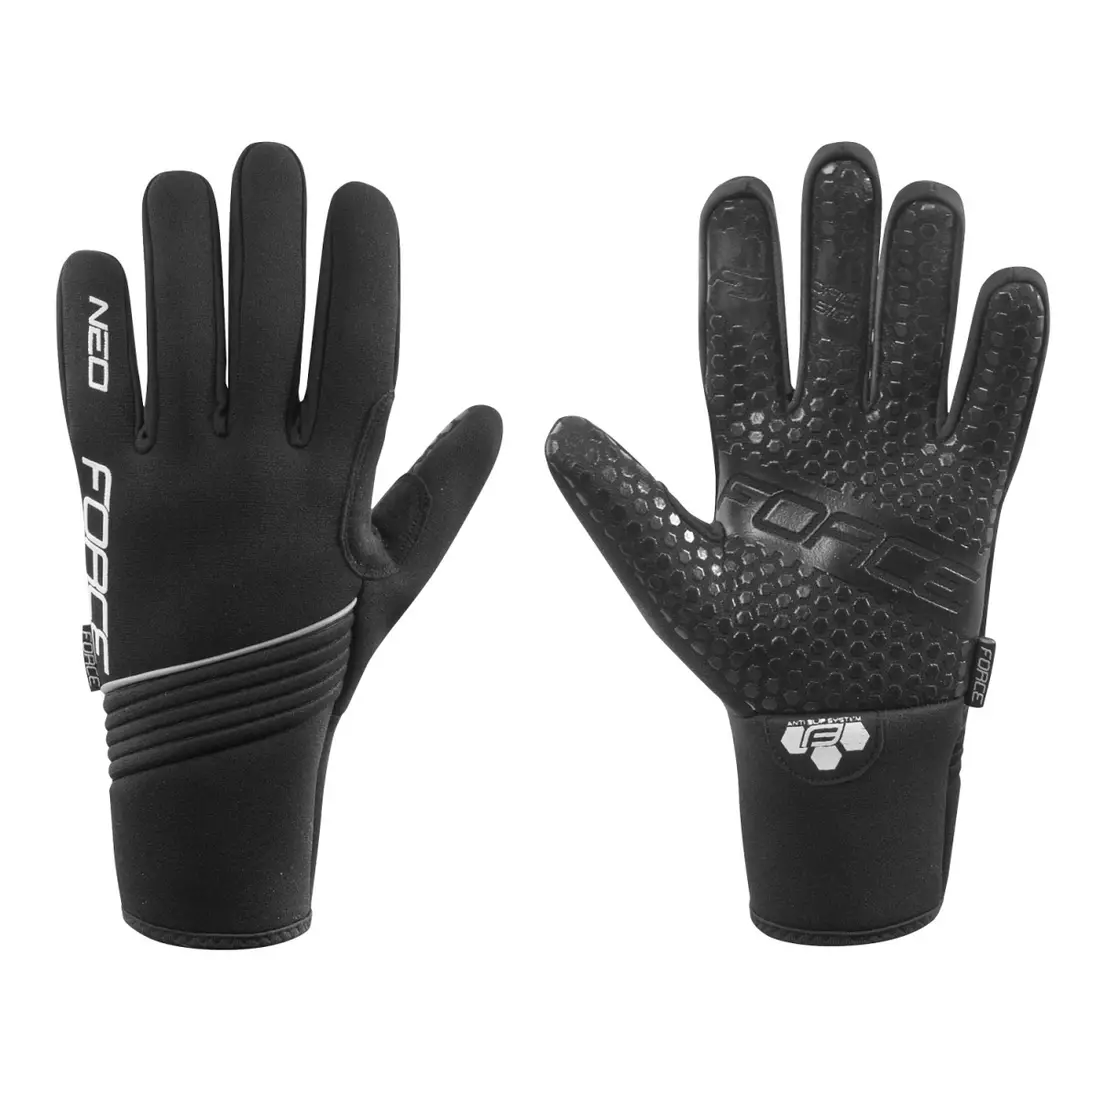 FORCE 90465 NEO winter gloves, black